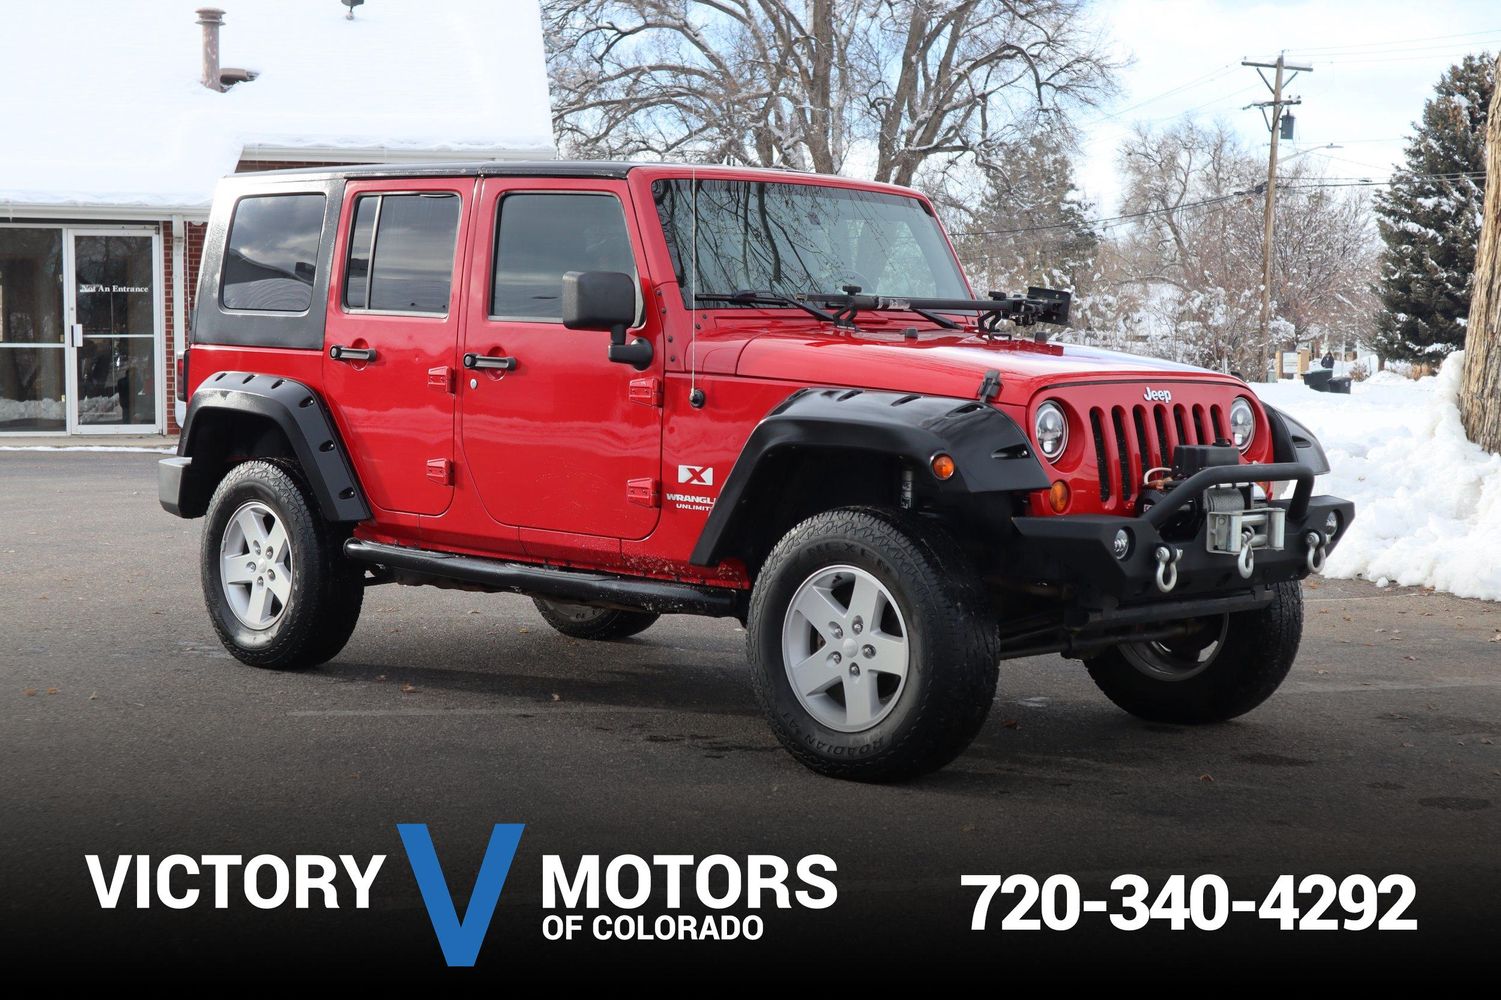 2007 Jeep Wrangler Unlimited X | Victory Motors of Colorado